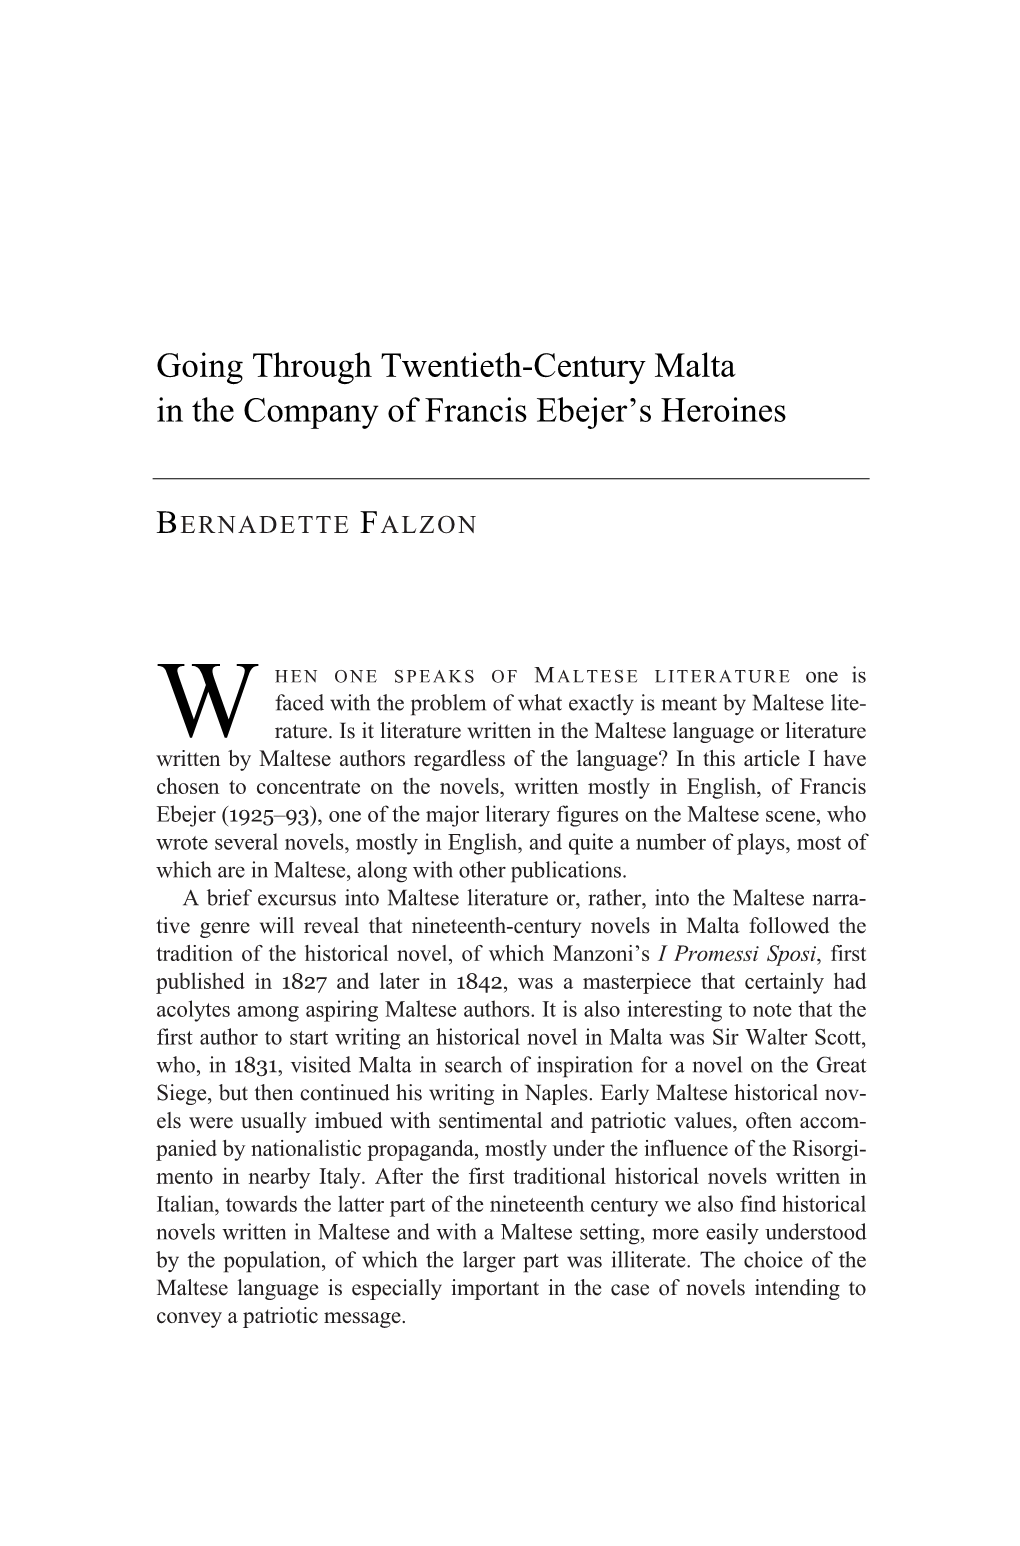 Going Through Twentieth-Century Malta in the Company of Francis Ebejer’S Heroines